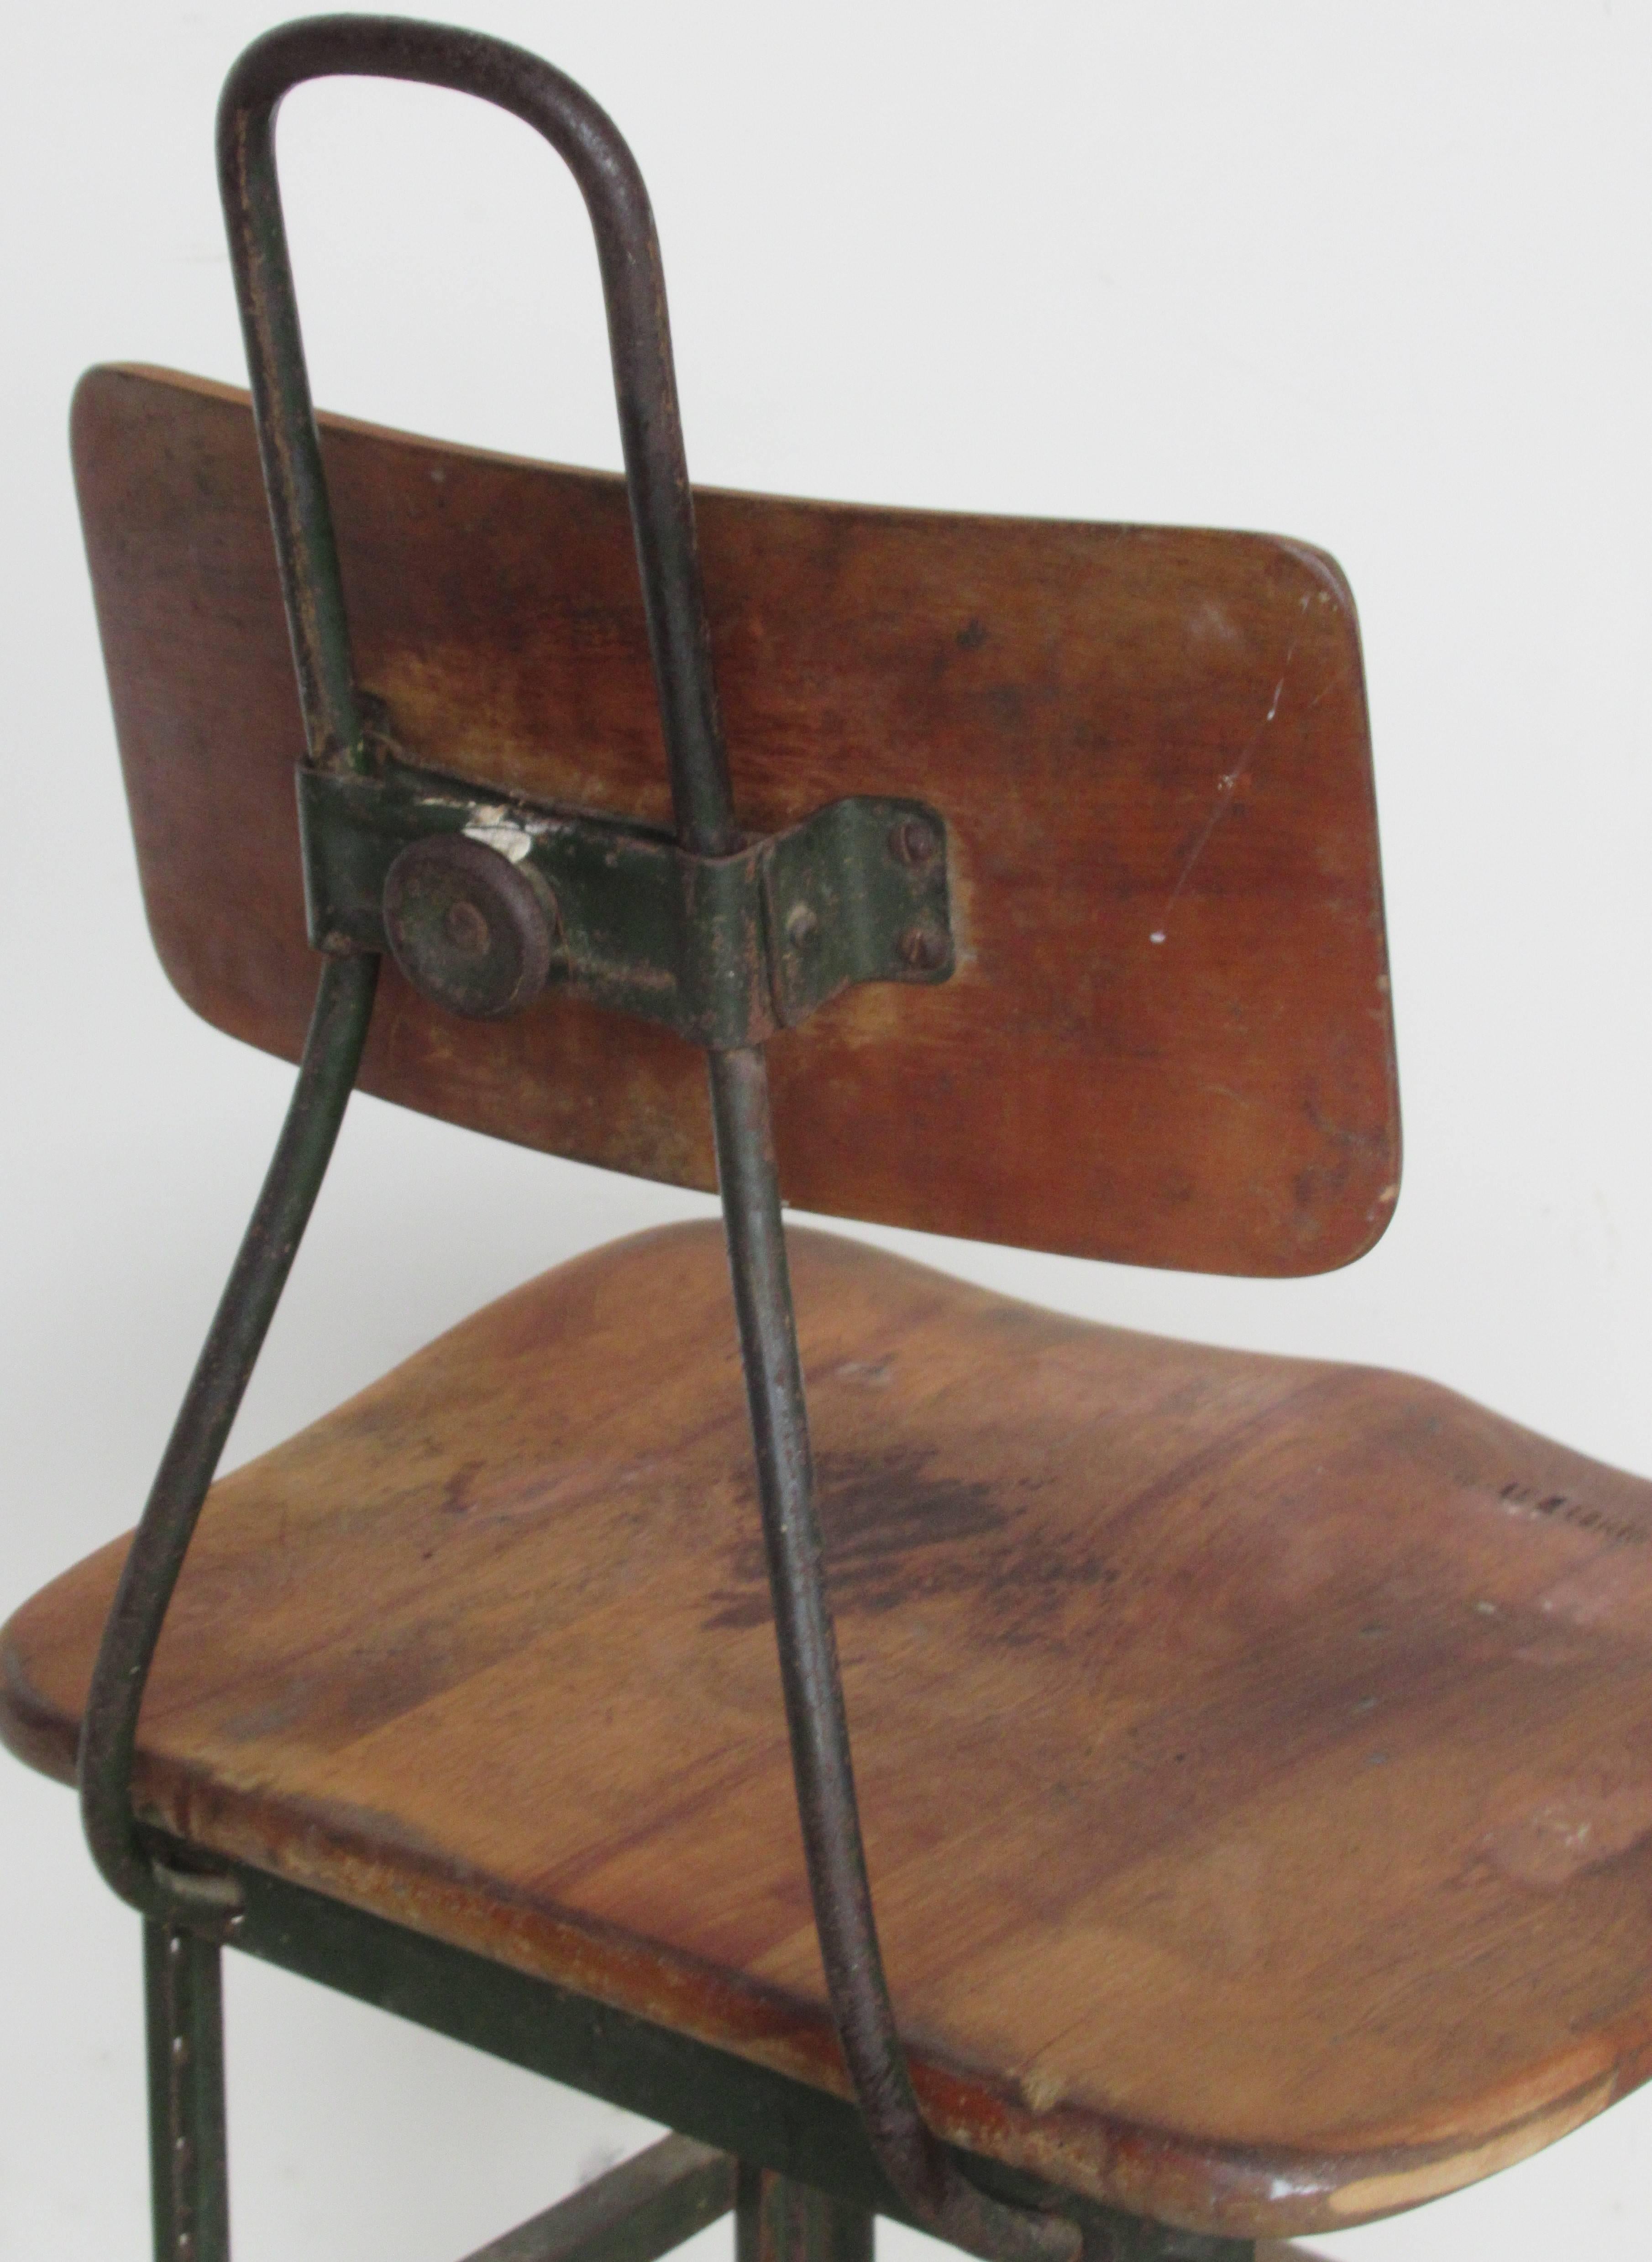 Antique Industrial Task Chair Stool Toledo 1